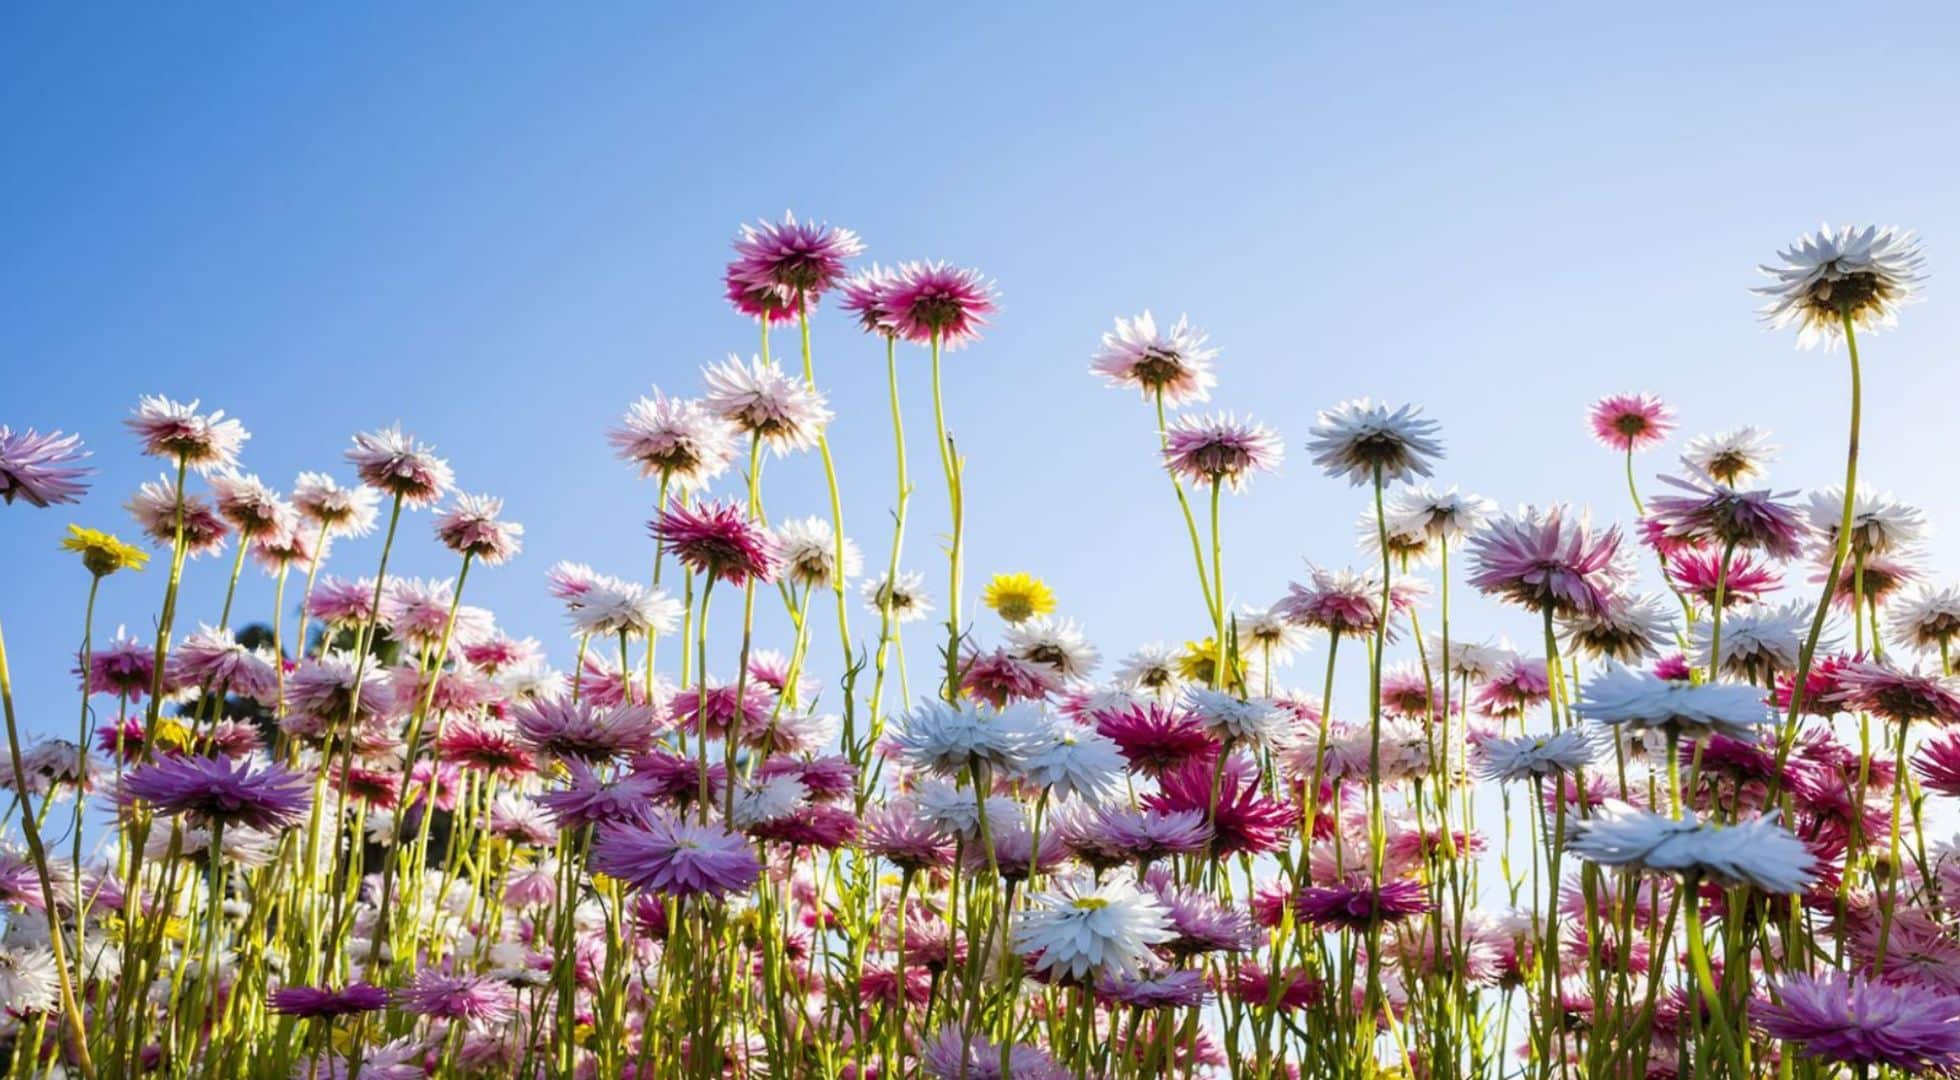 Australian paper daisies are light, fun and full of joy